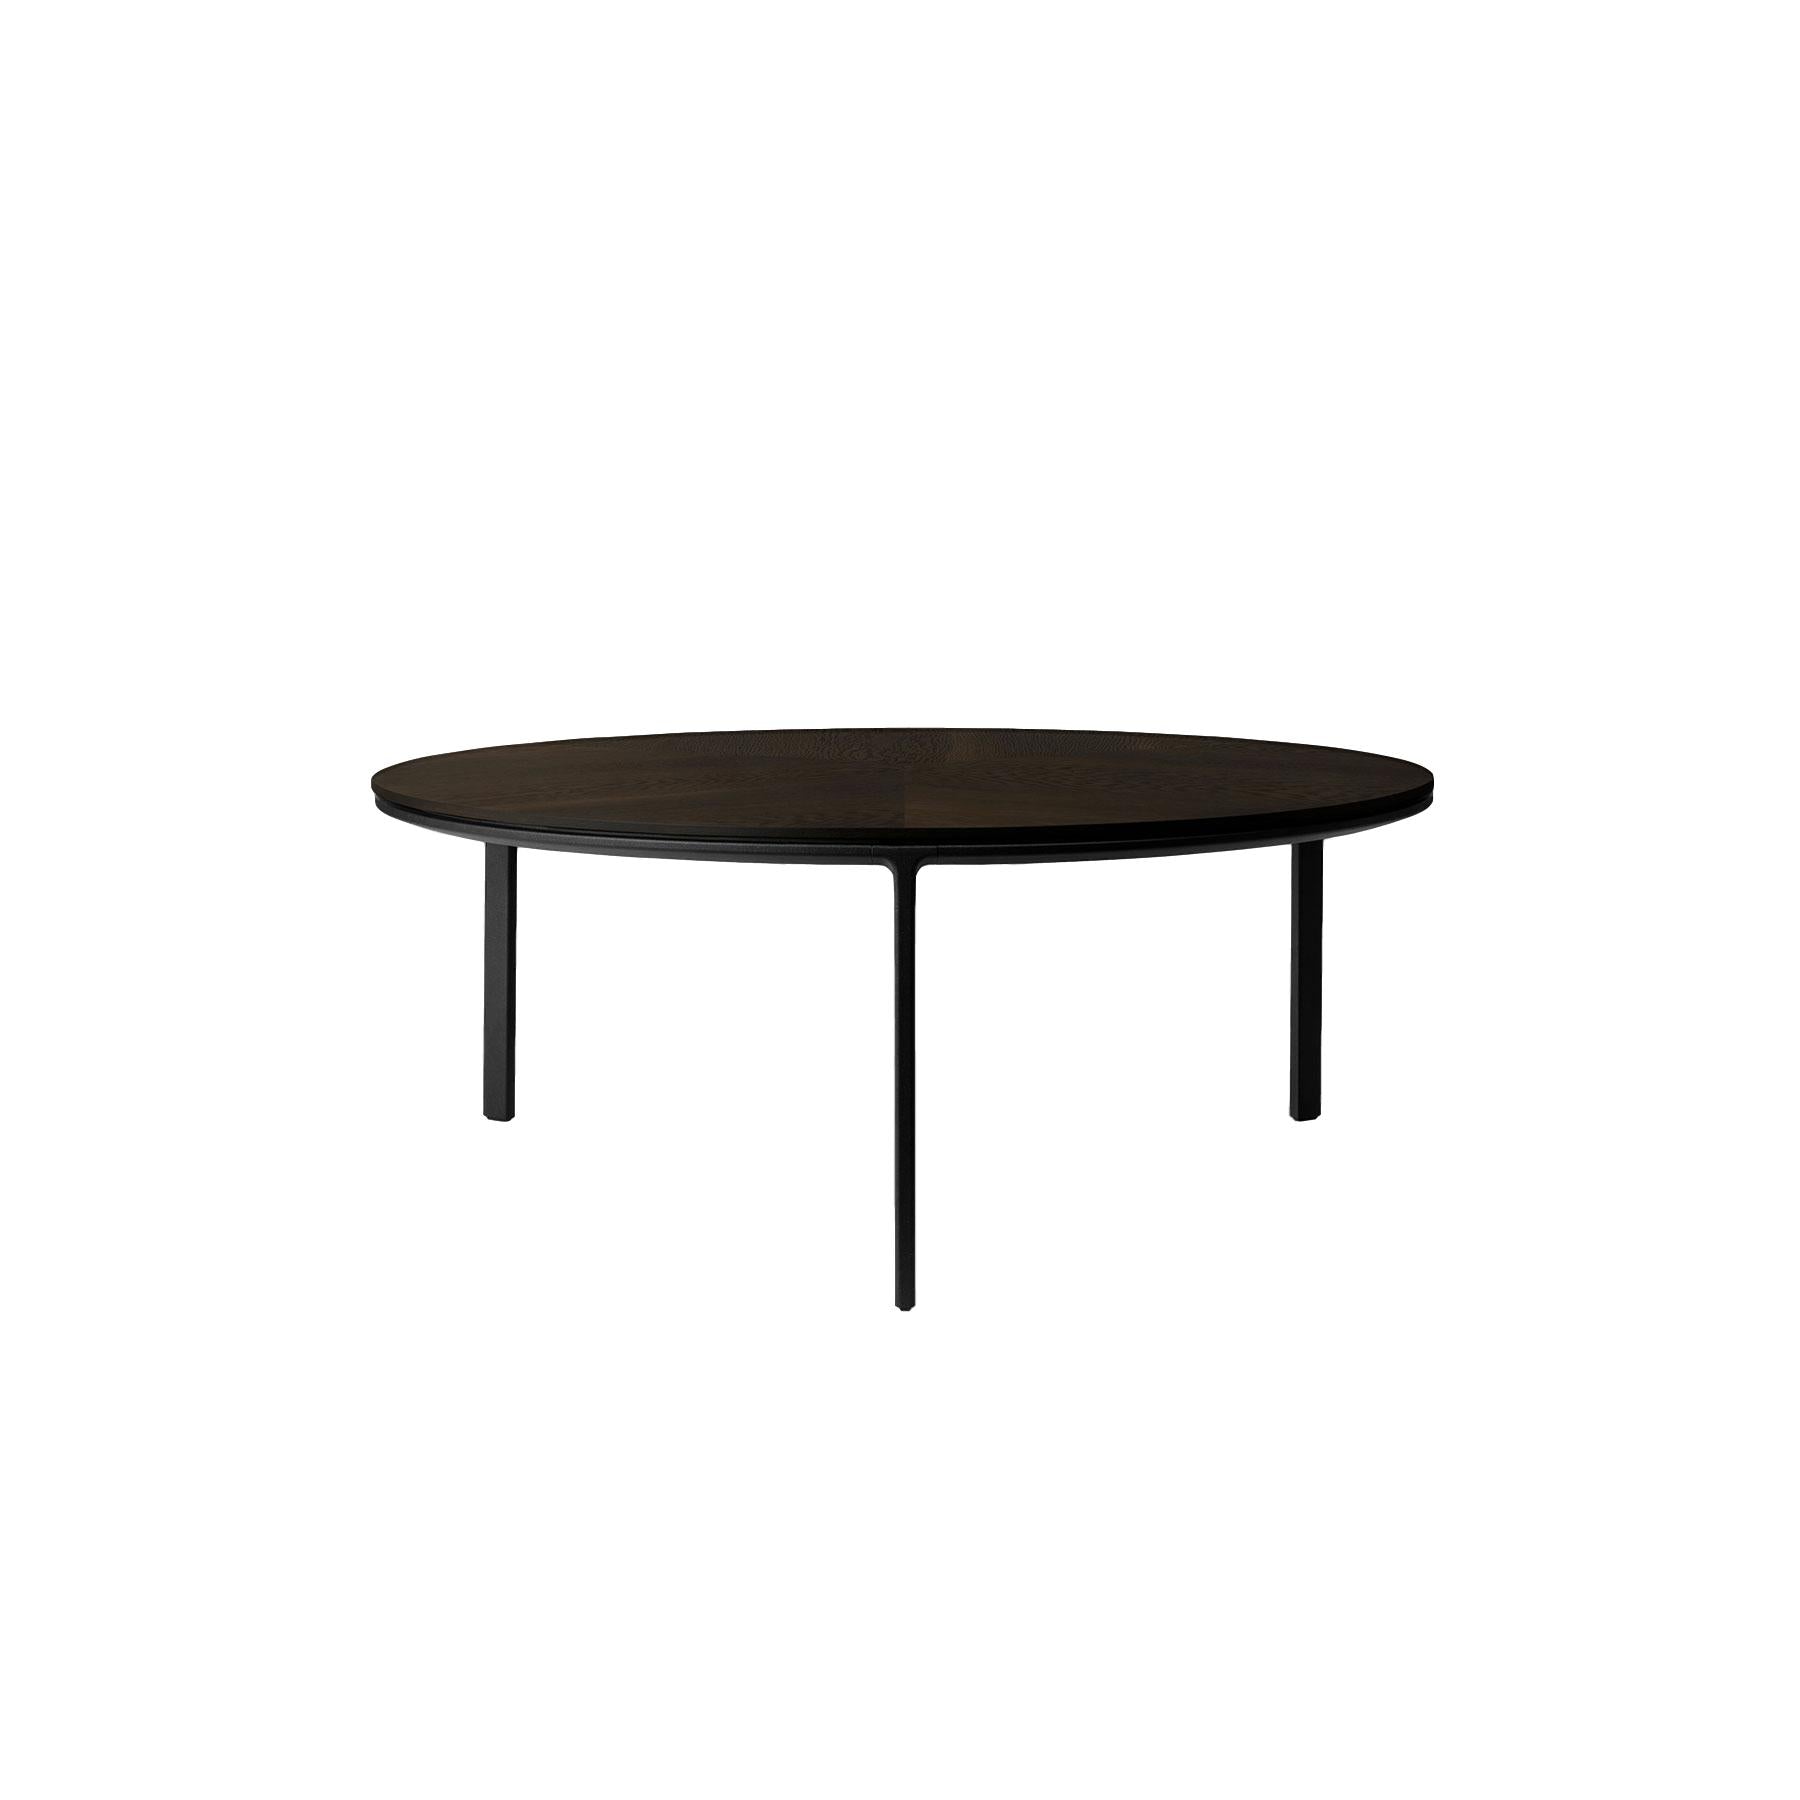 VIPP 425 Table basse placage en chêne noir, Ø 90cm